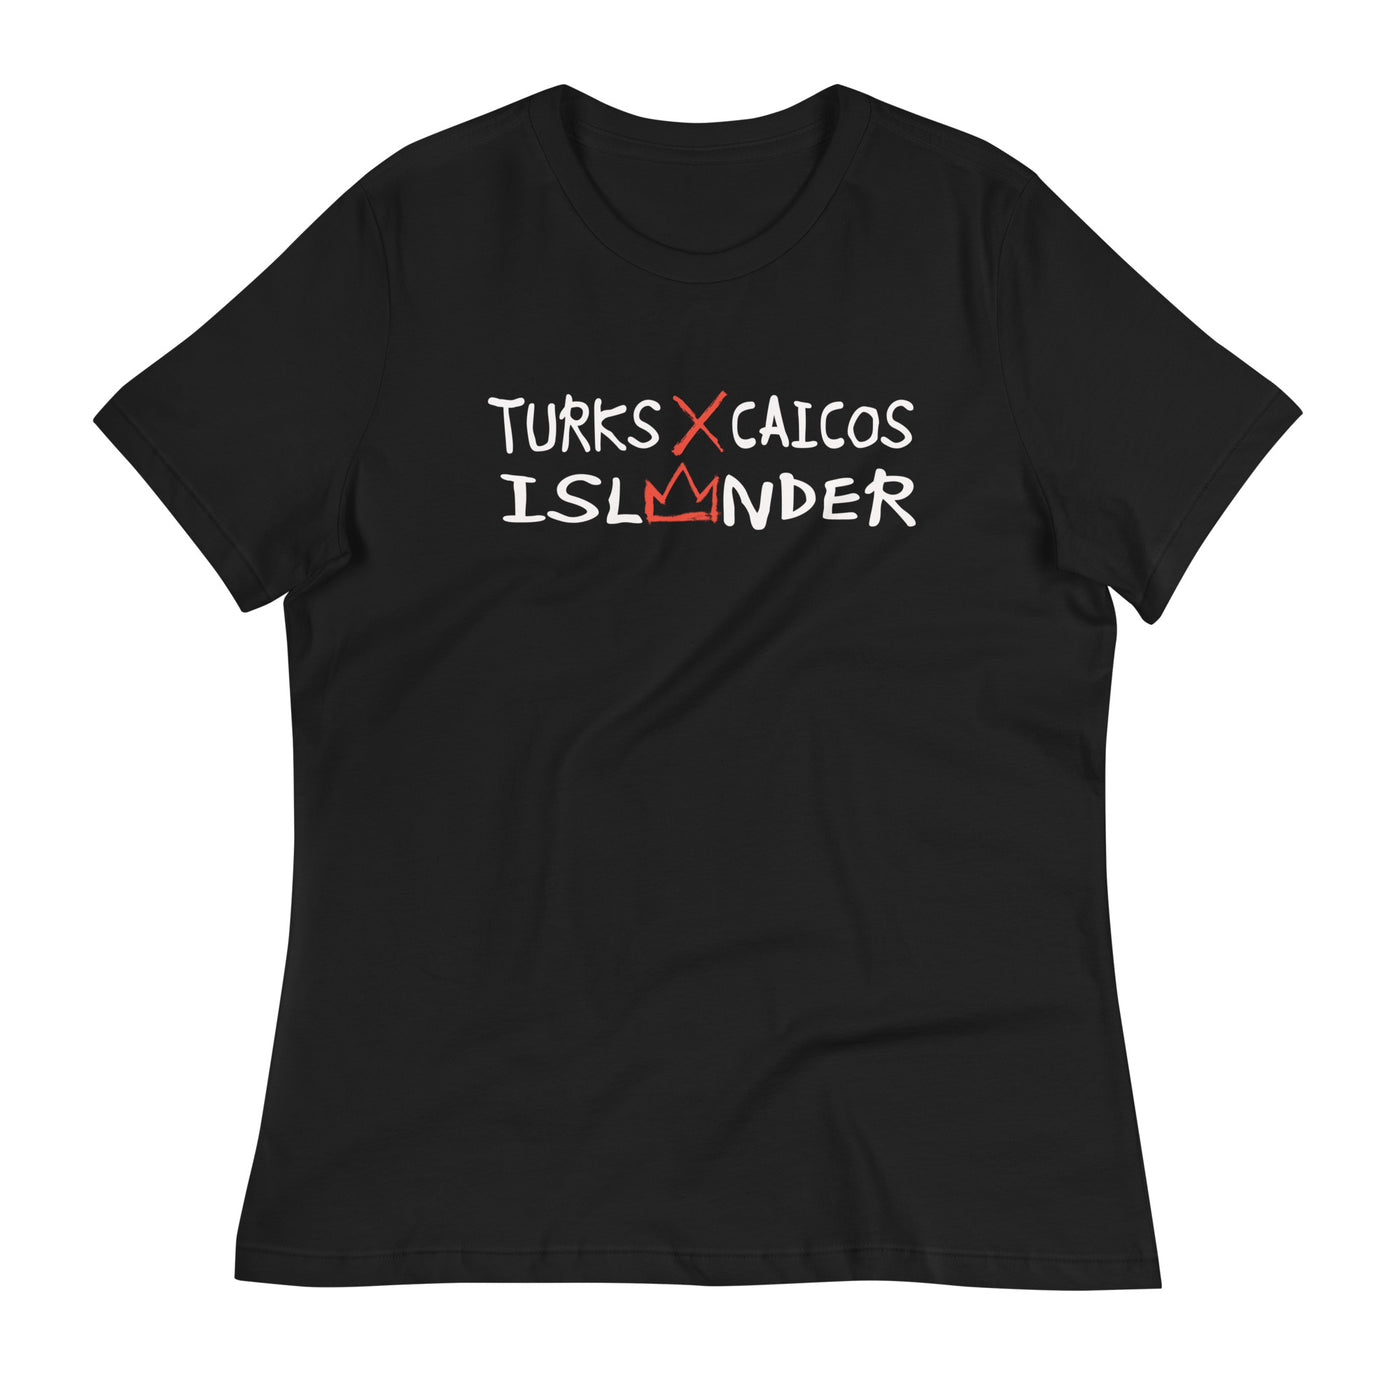 Turks X Caicos Islander Women's T-Shirt